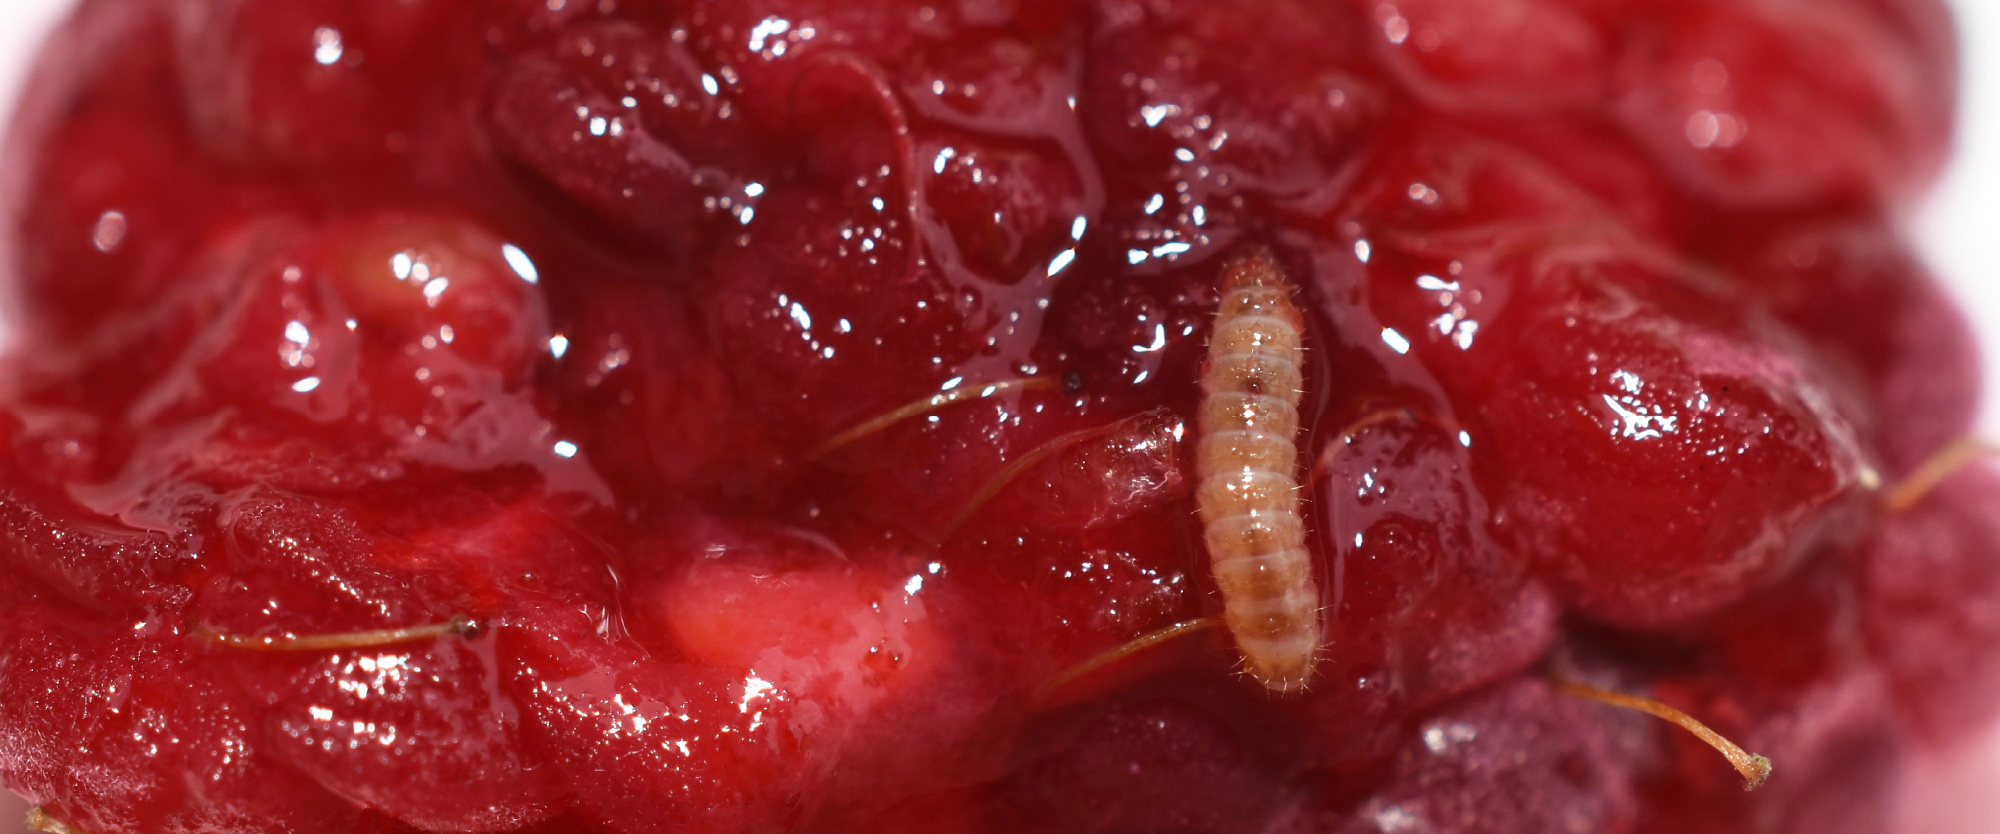 BioBee - Raspberry USA fruitworm